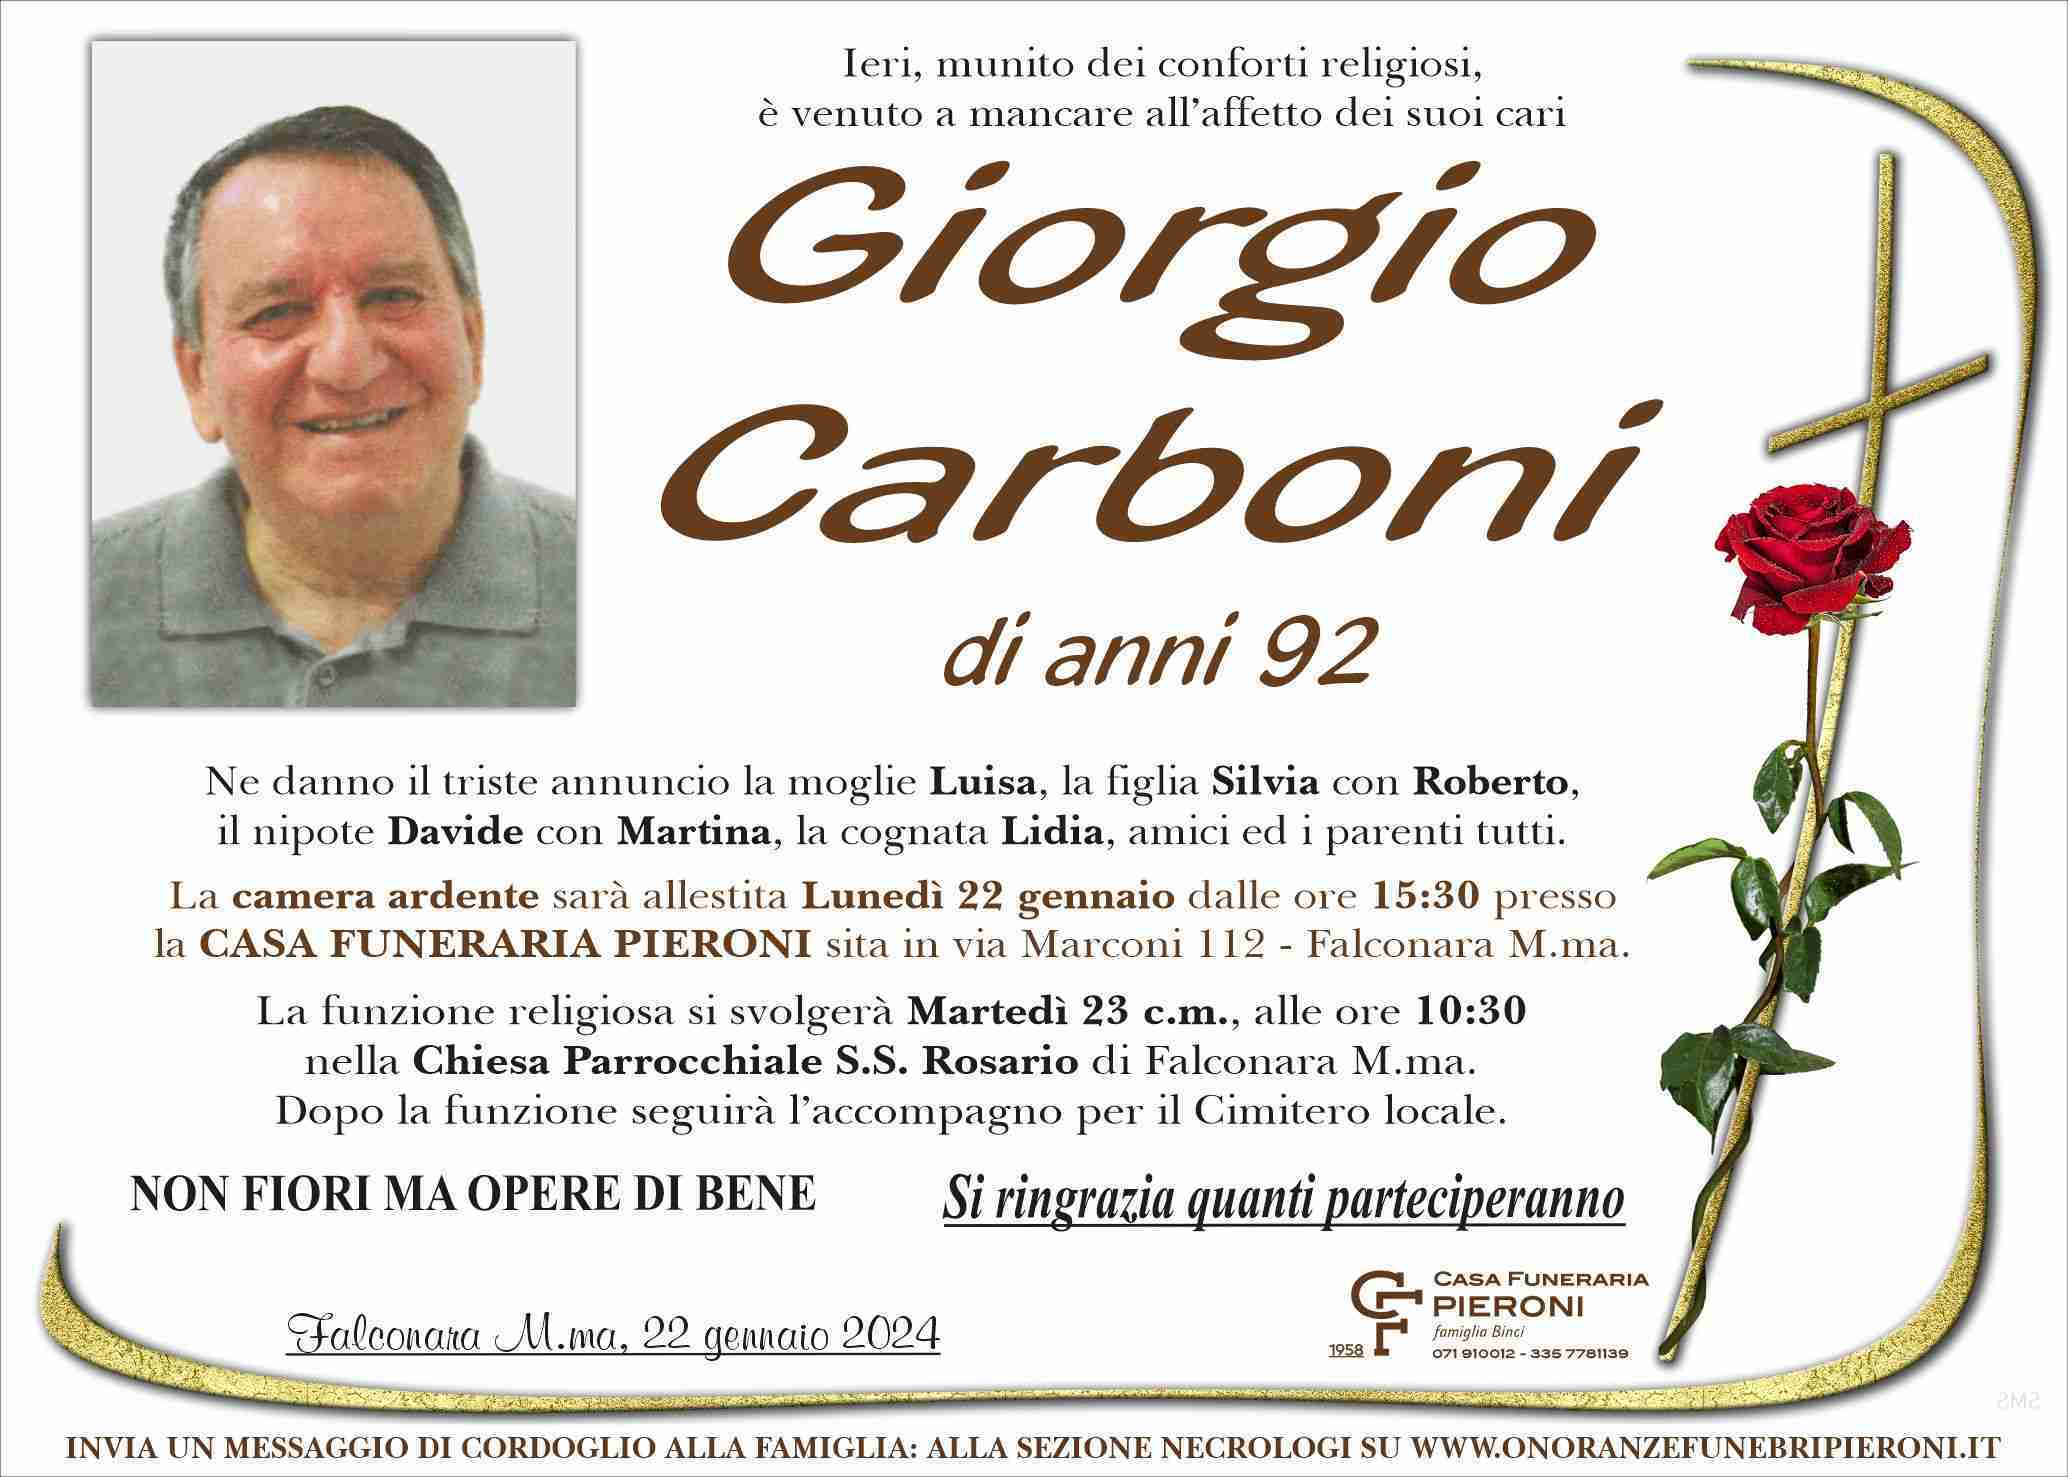 Giorgio Carboni